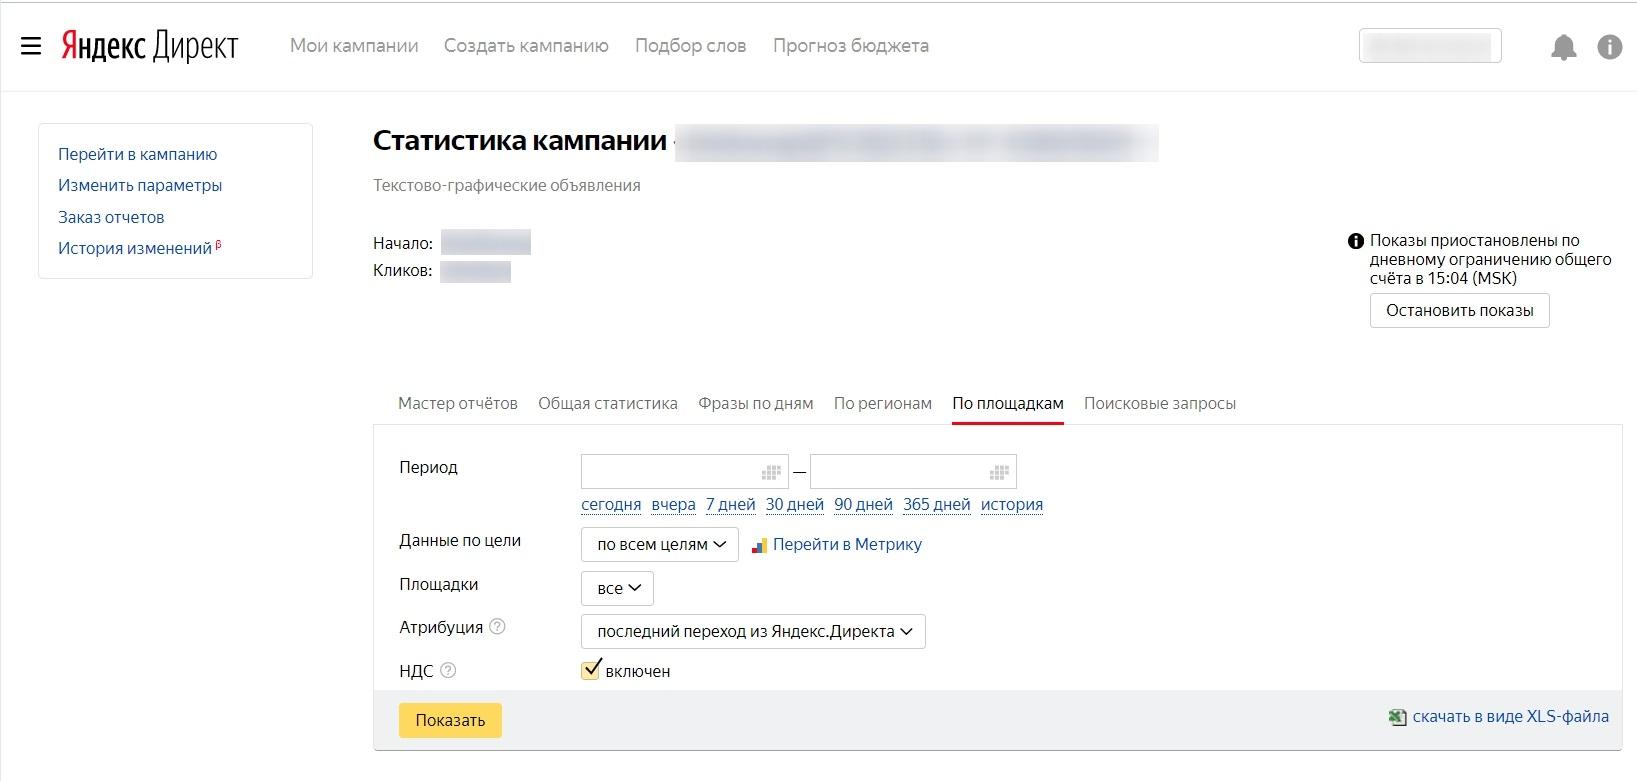 Оптимизация рекламной кампании в Яндекс.Директ-7